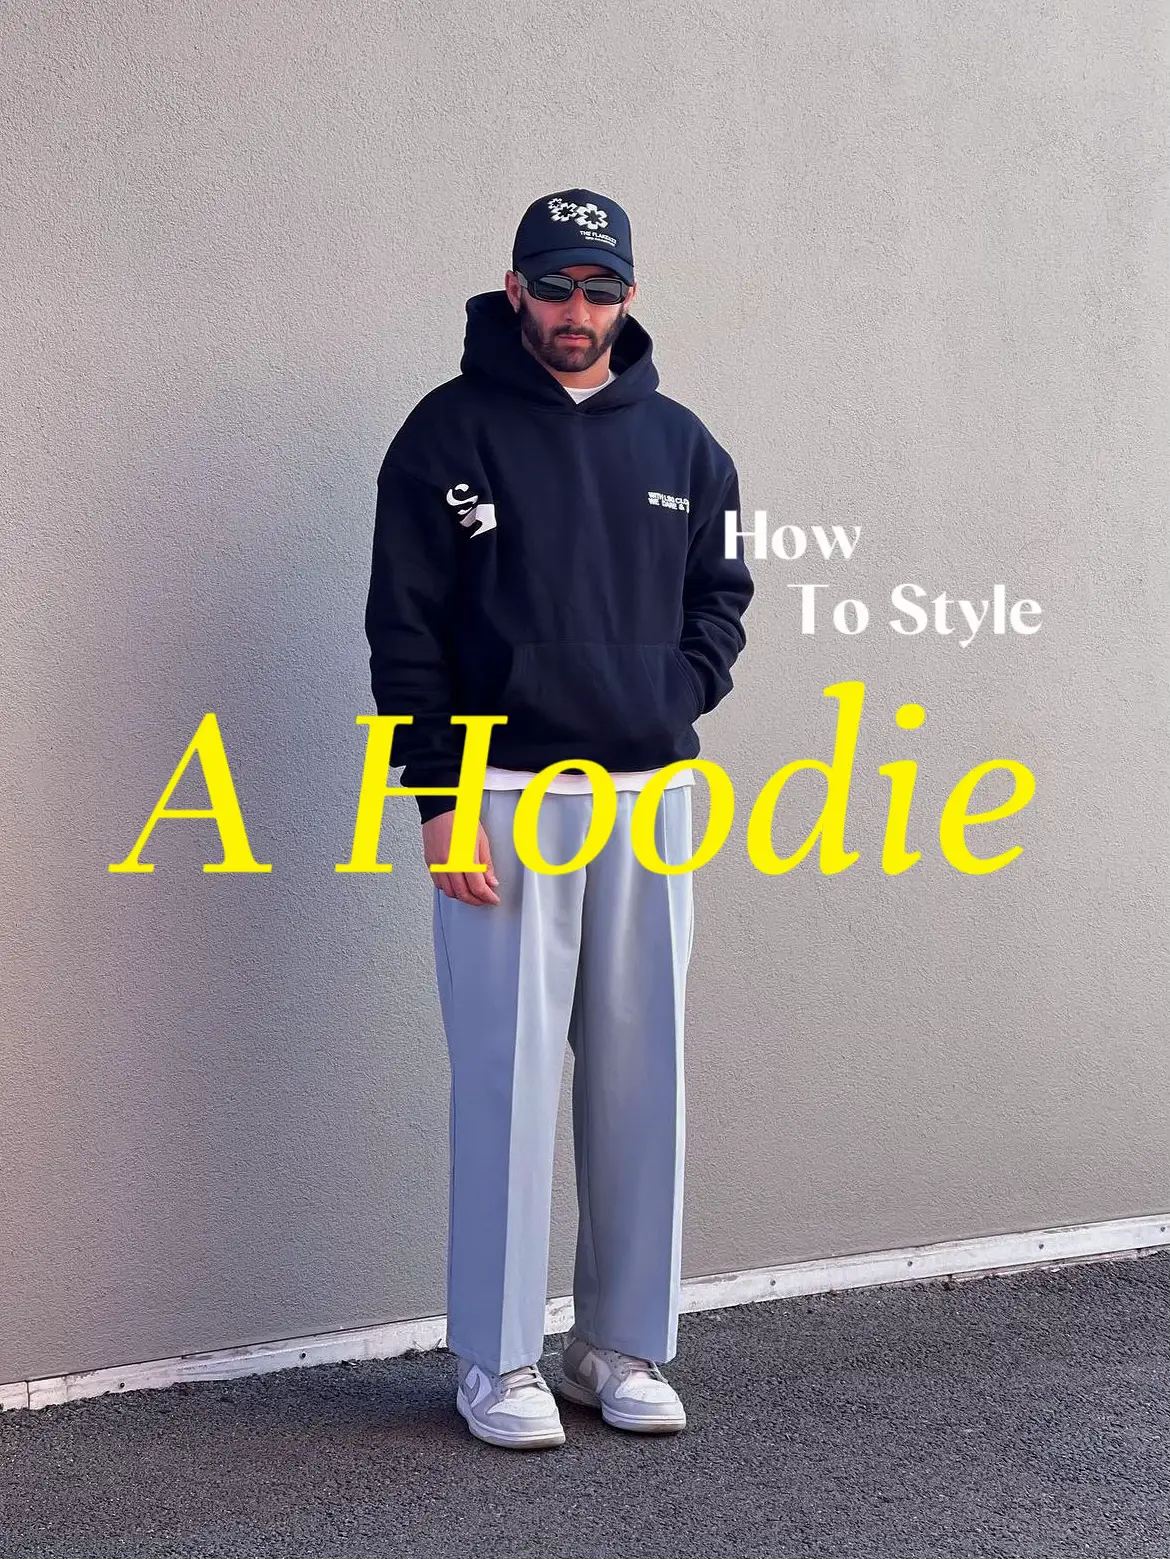 style hoodie oversize pria - Lemon8 Search